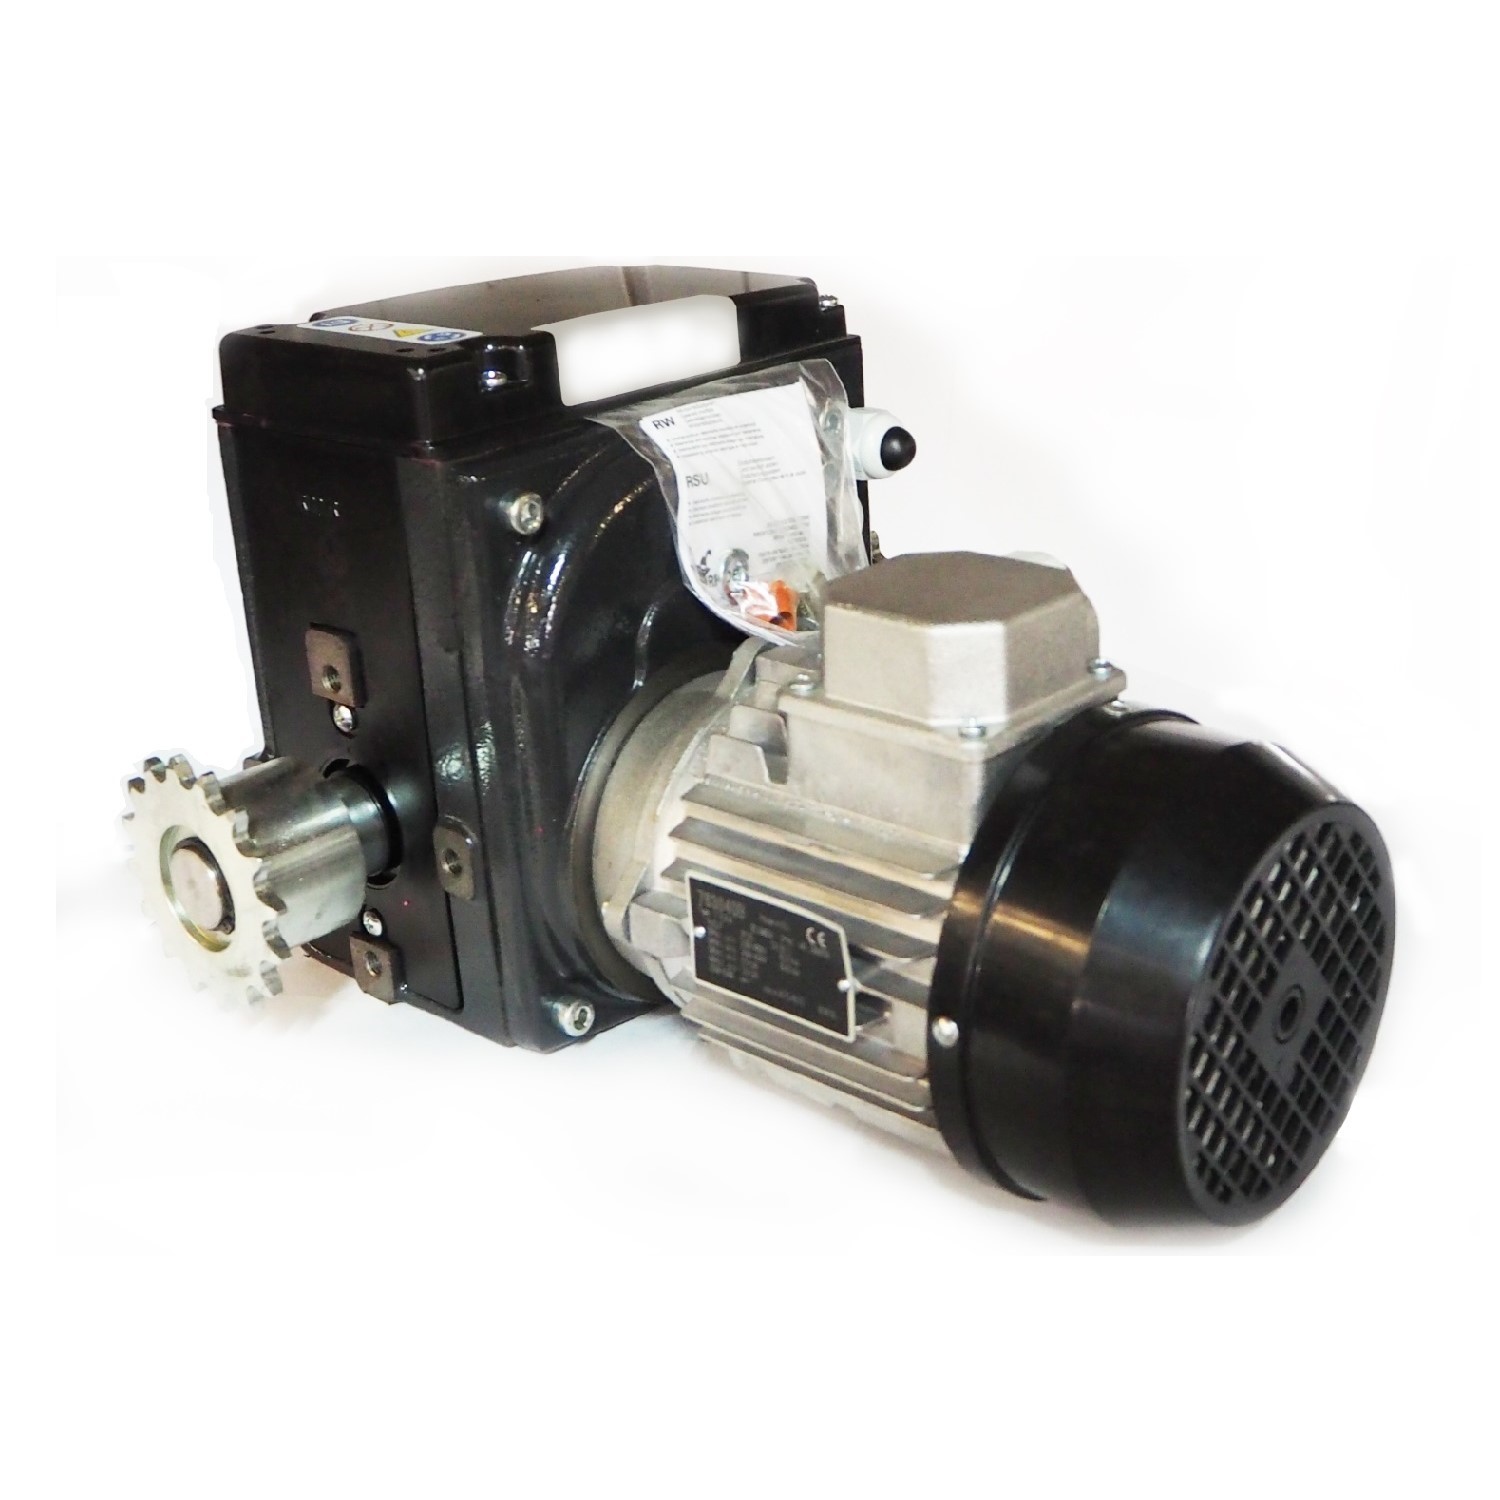 Motor gearbox RW 243 400-460Volt/3-Phase/3 rpm